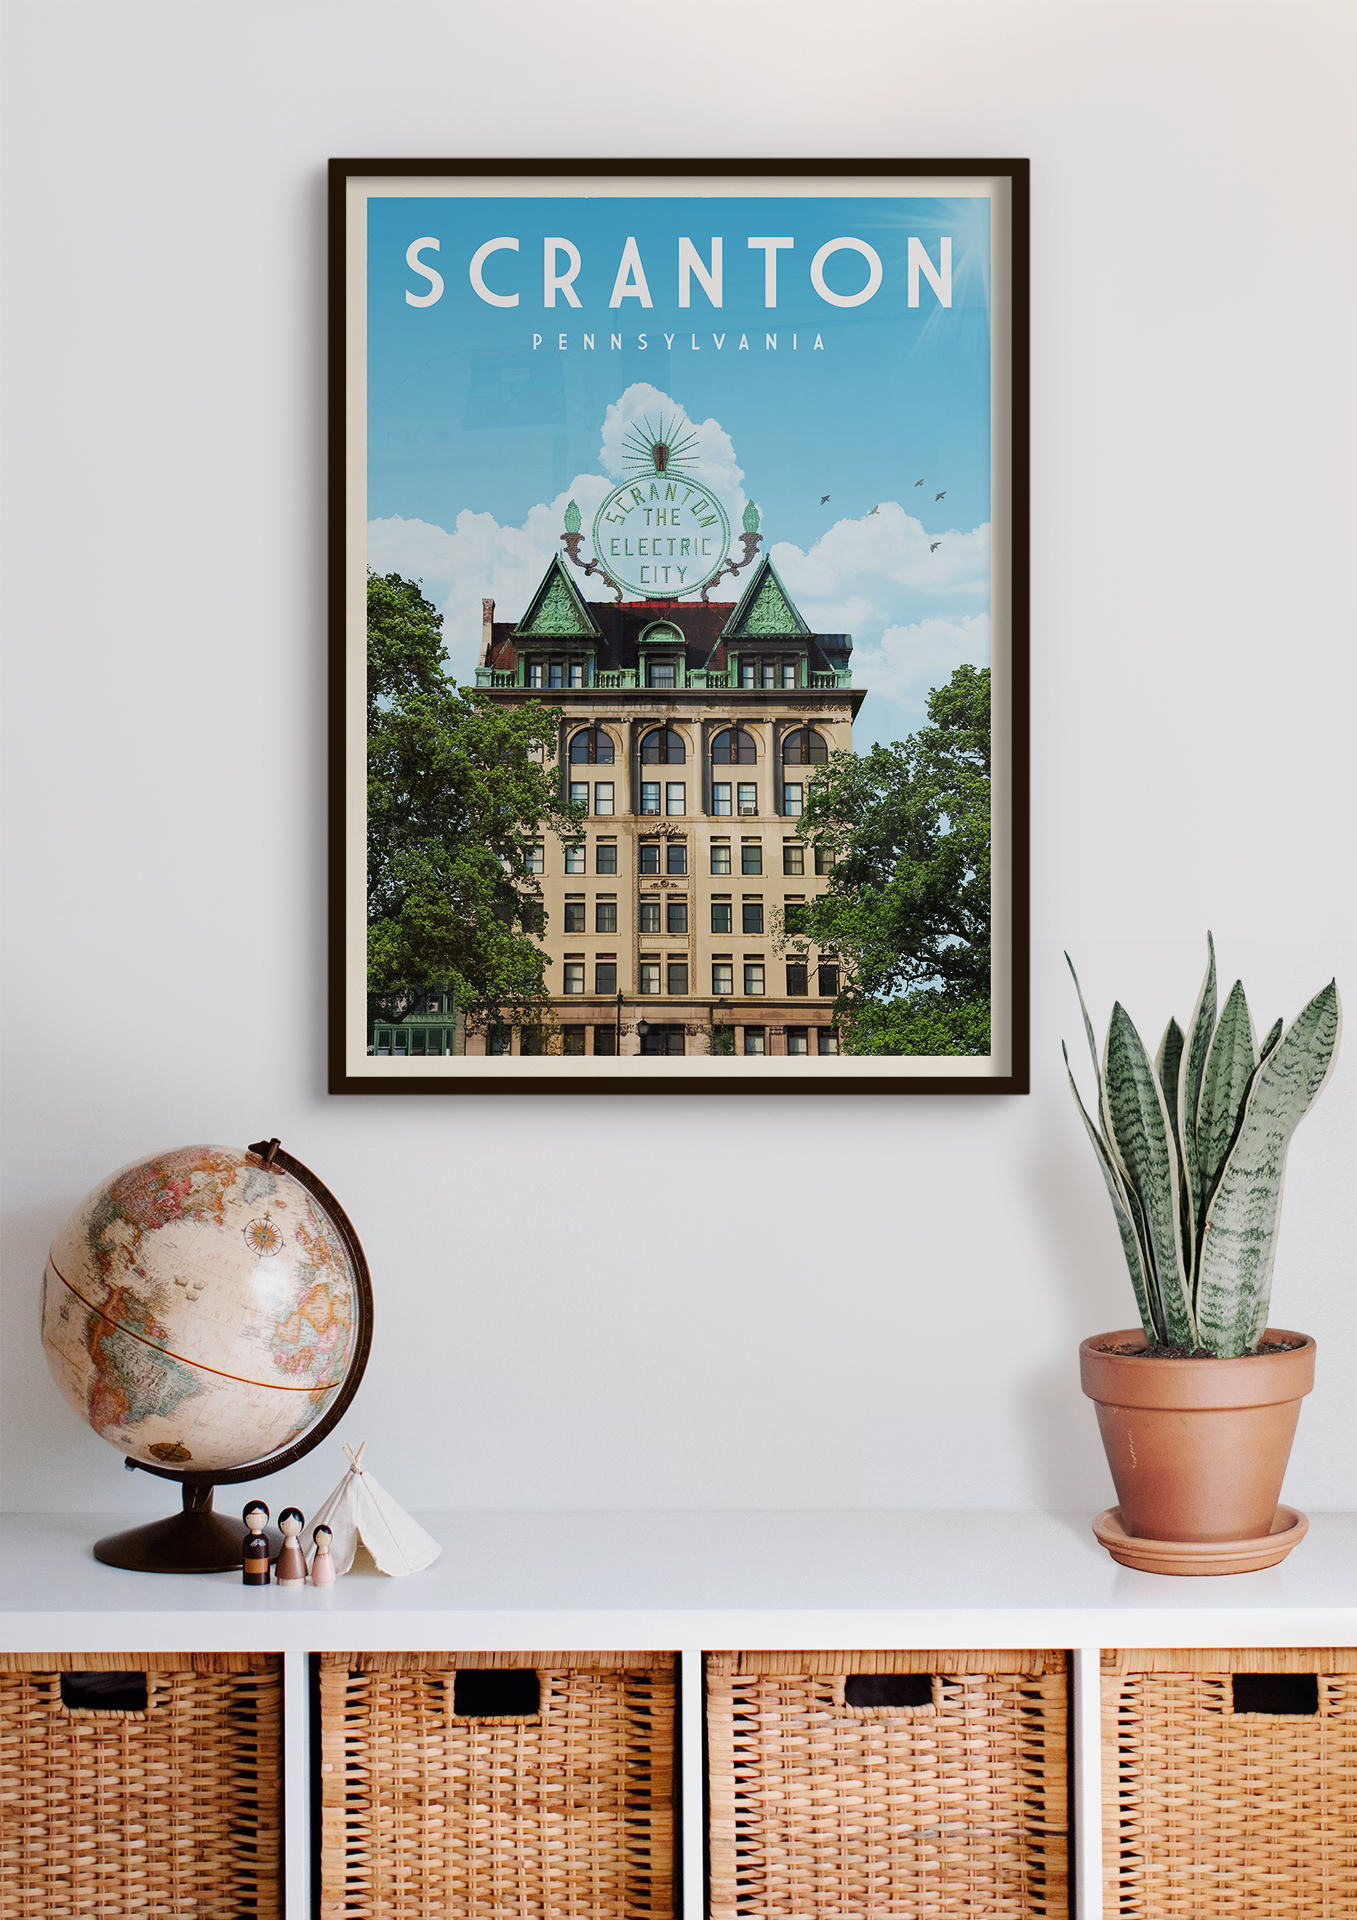 Scranton, Pennsylvania - Vintage Travel Print